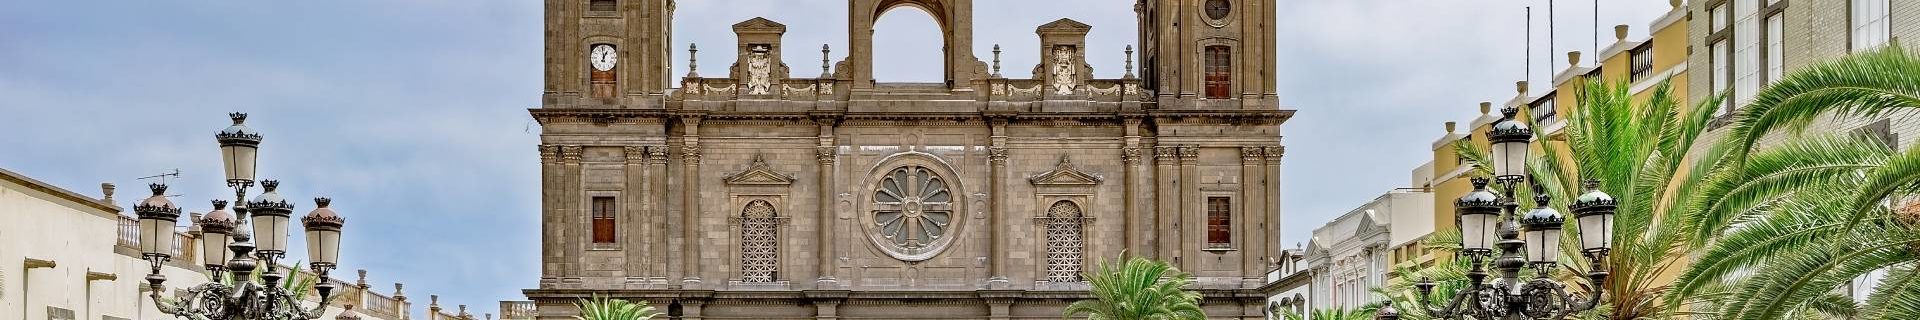 Las Palmas De Gran Canaria - Kathedrale Santa Ana - Vegueta